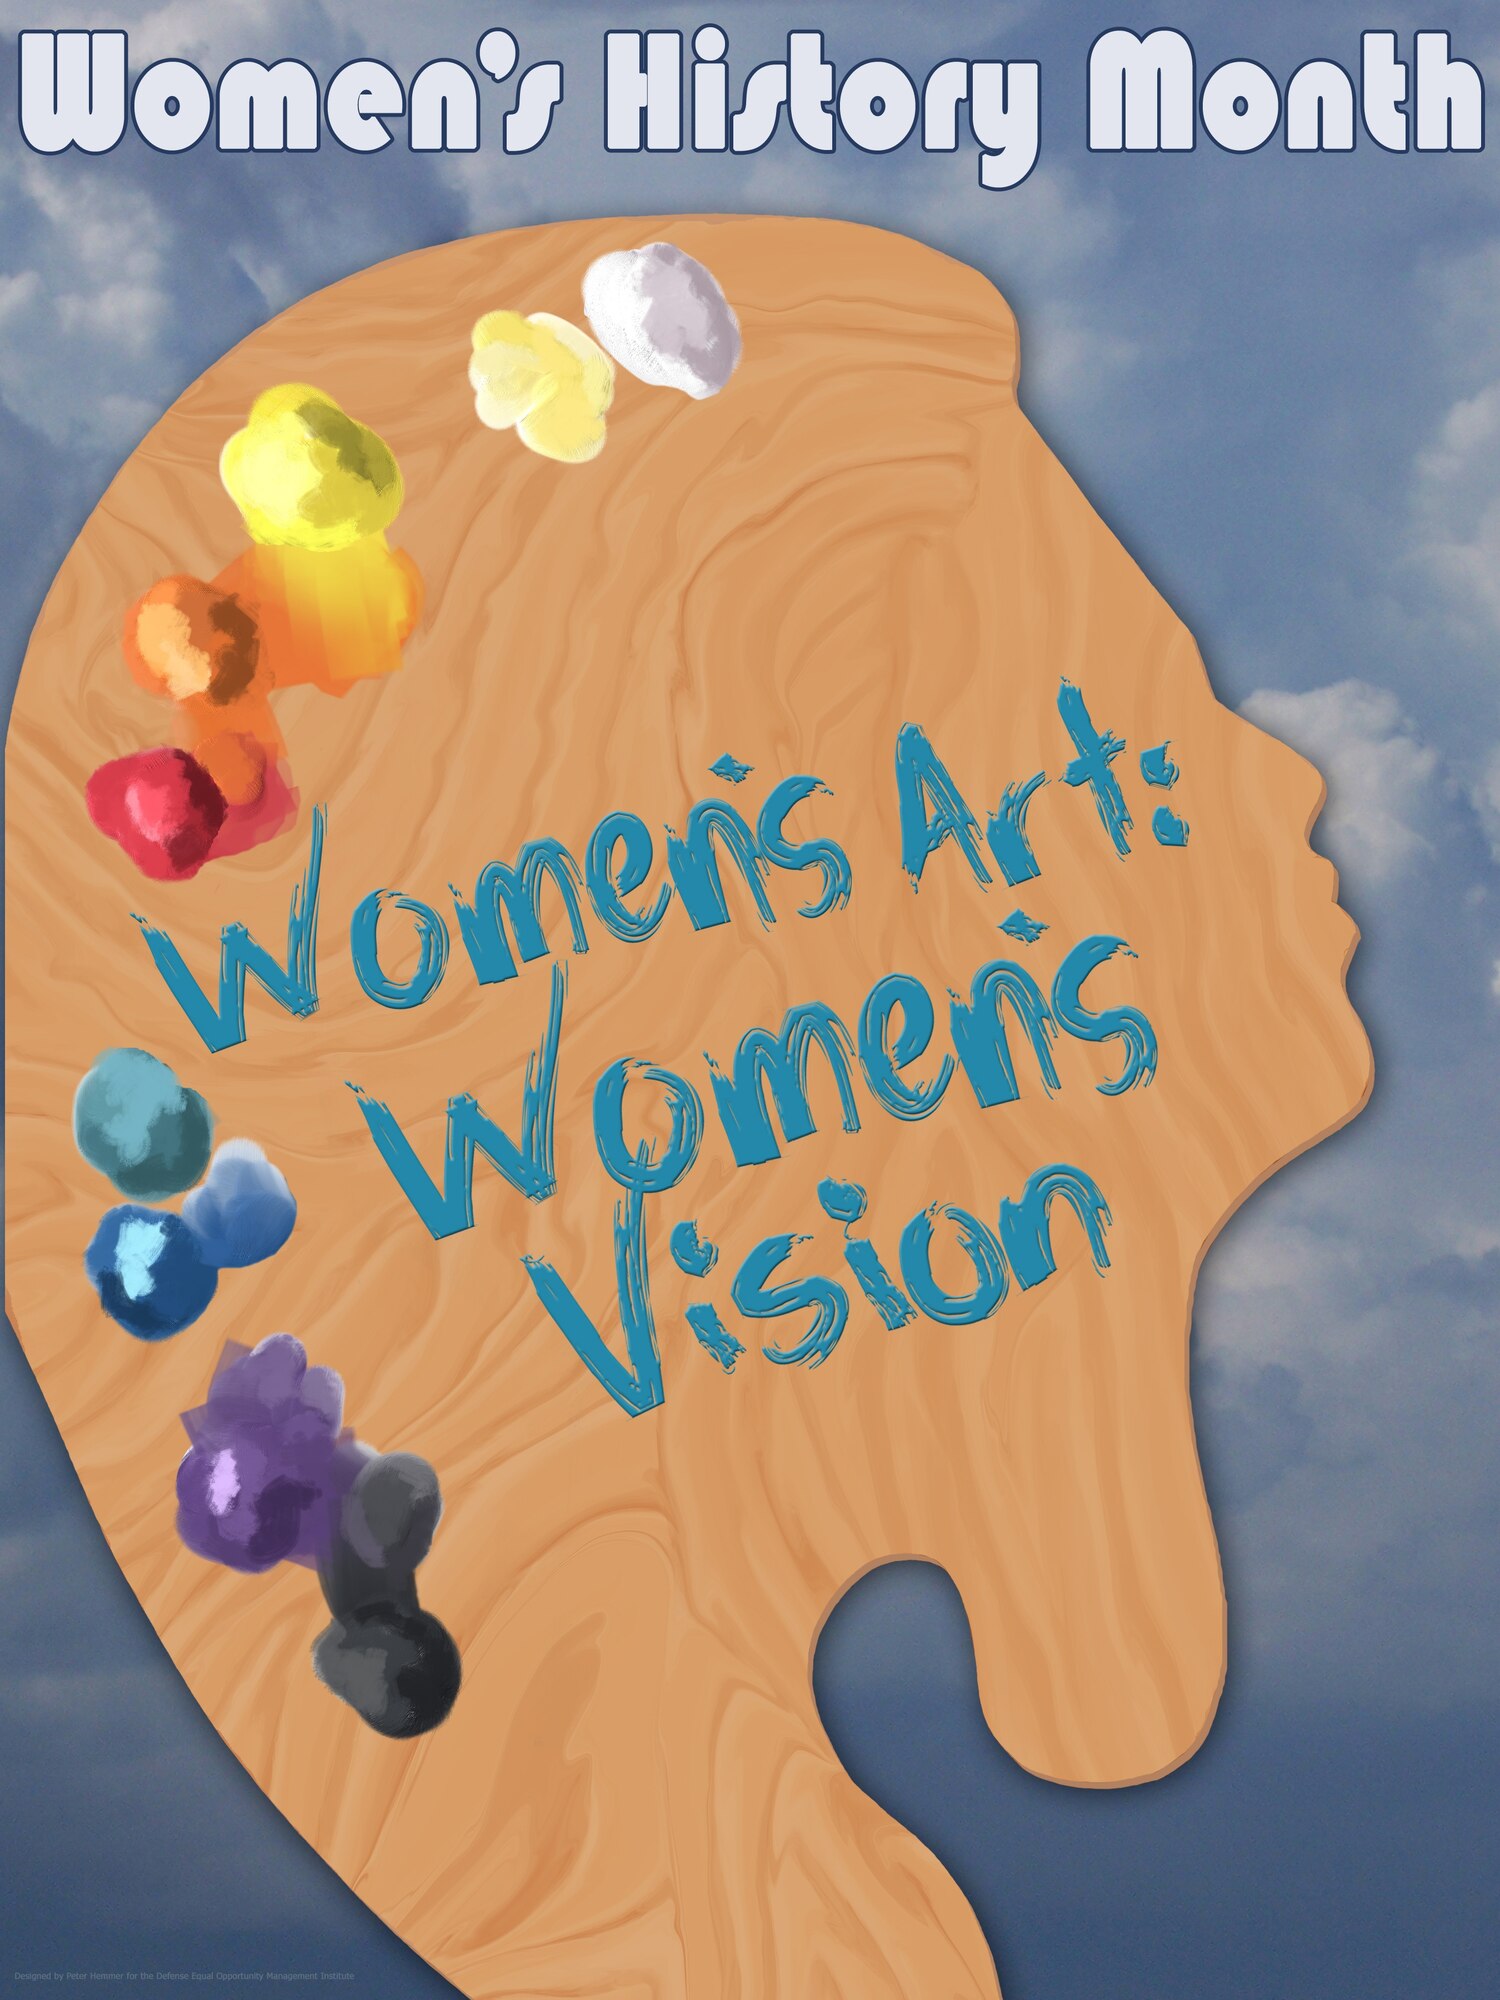 2008 Women's History Month Logo